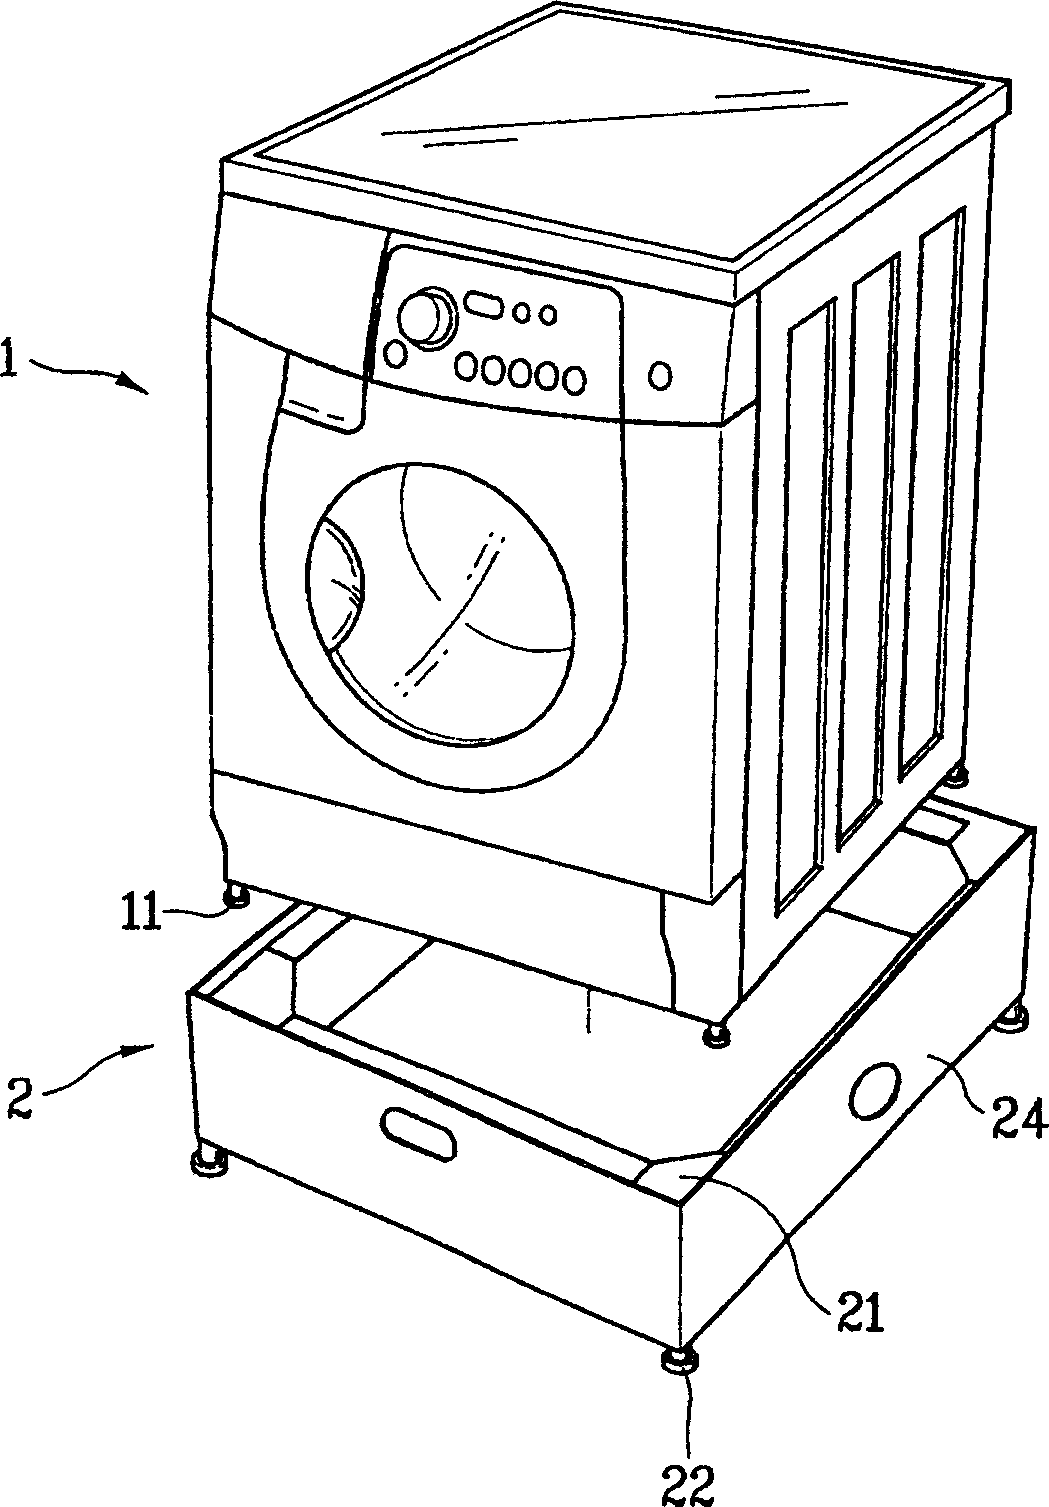 Arrangement bench for drum washing machine and assembly structure of drum washing machine and arrangement bench